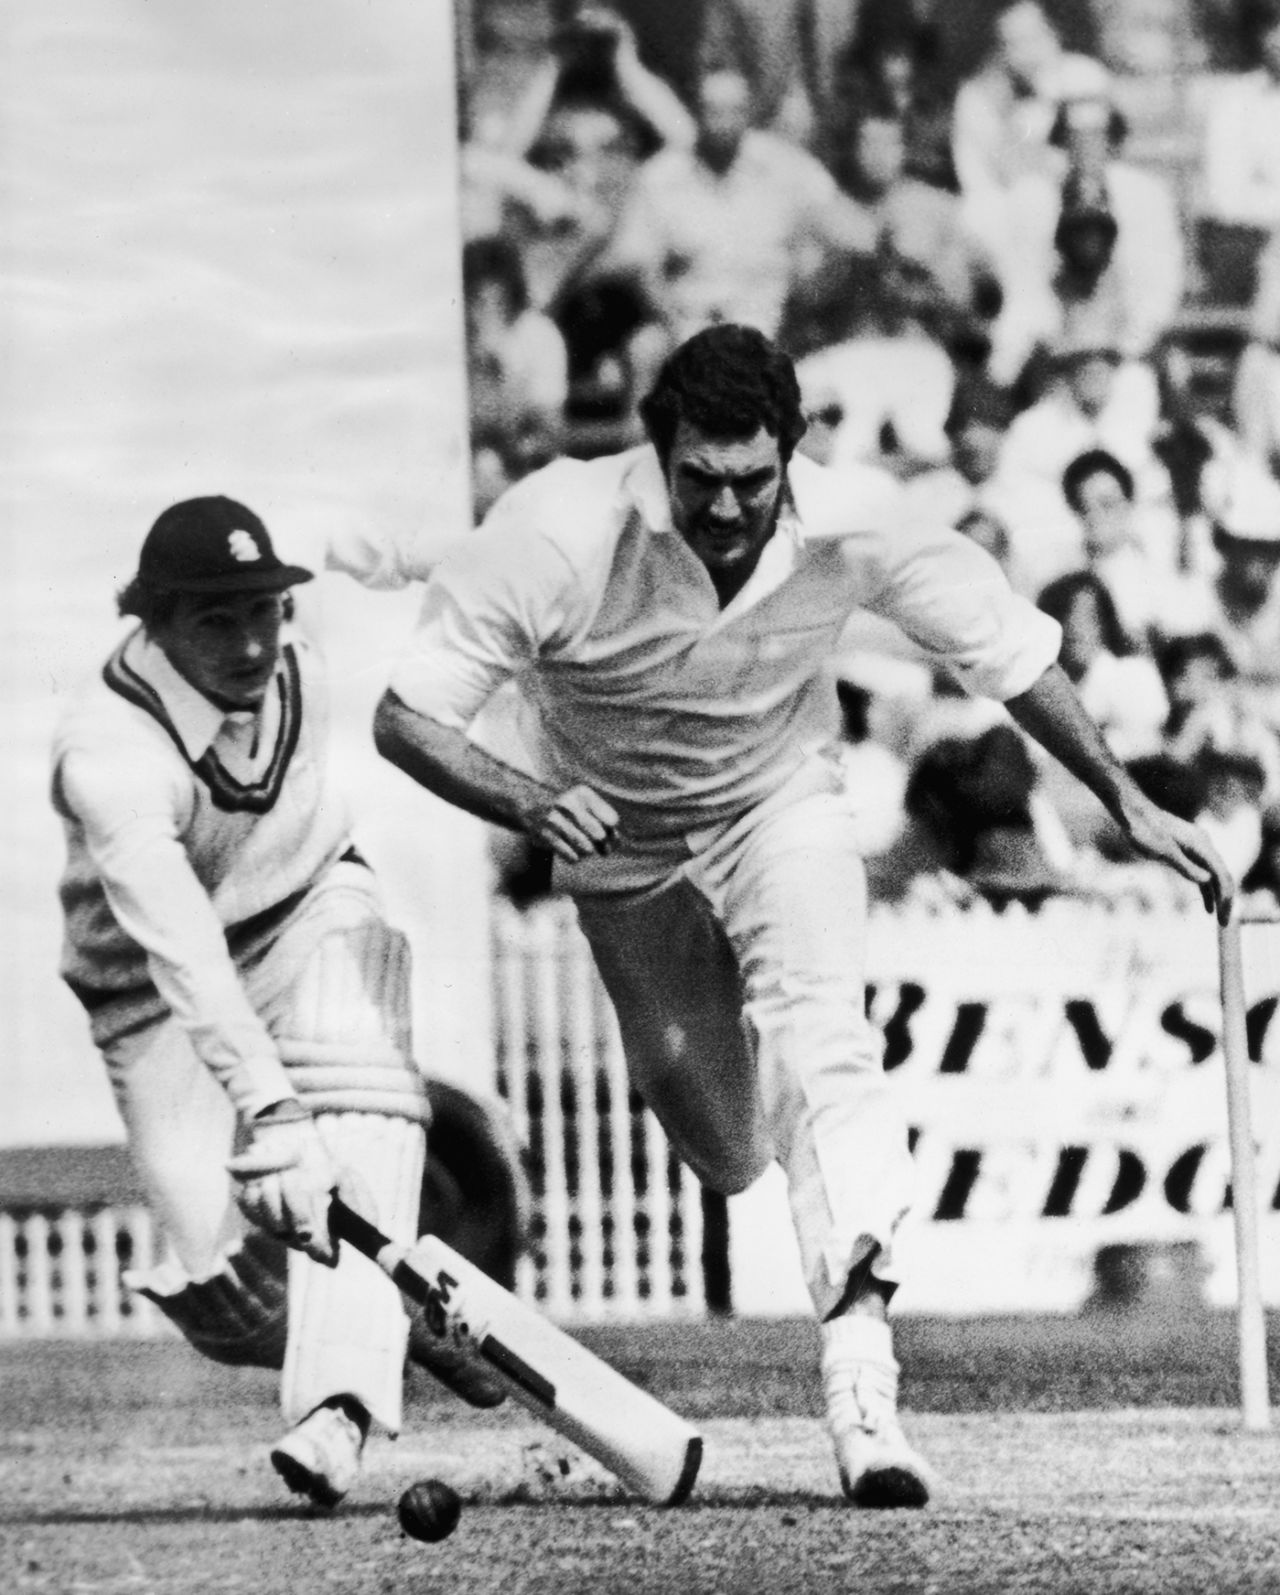 Greg Chappell rushes towards the ball past Derek Randall, Australia v England, Centenary Test, first day, Melbourne, March 1977